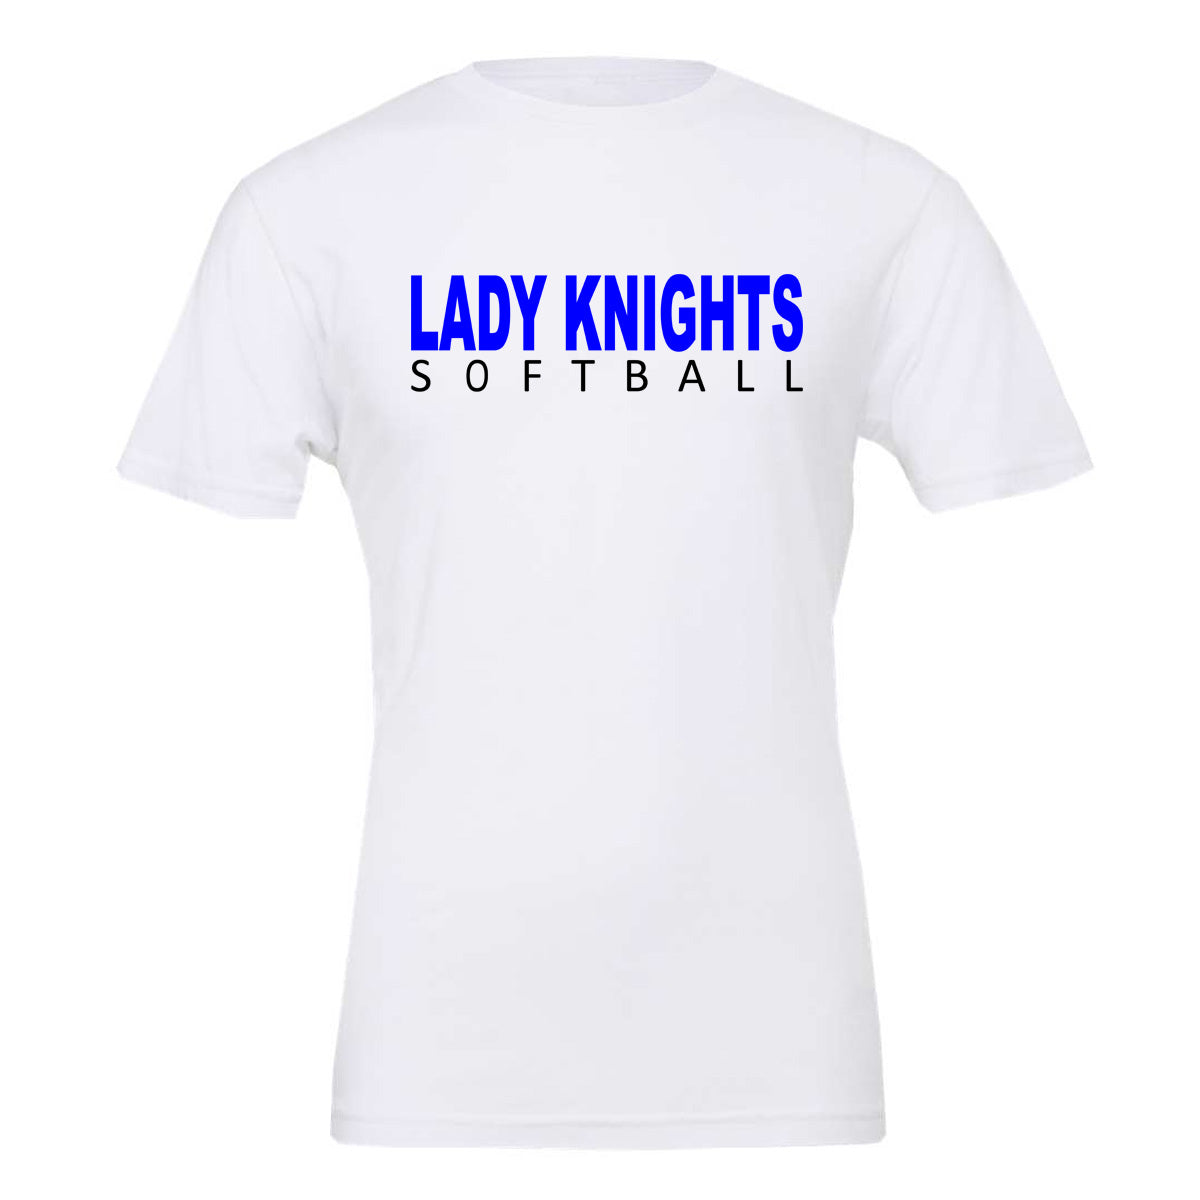 Windsor - Lady Knights Softball 5 - White (Tee/DriFit/Hoodie/Sweatshirt) - Southern Grace Creations